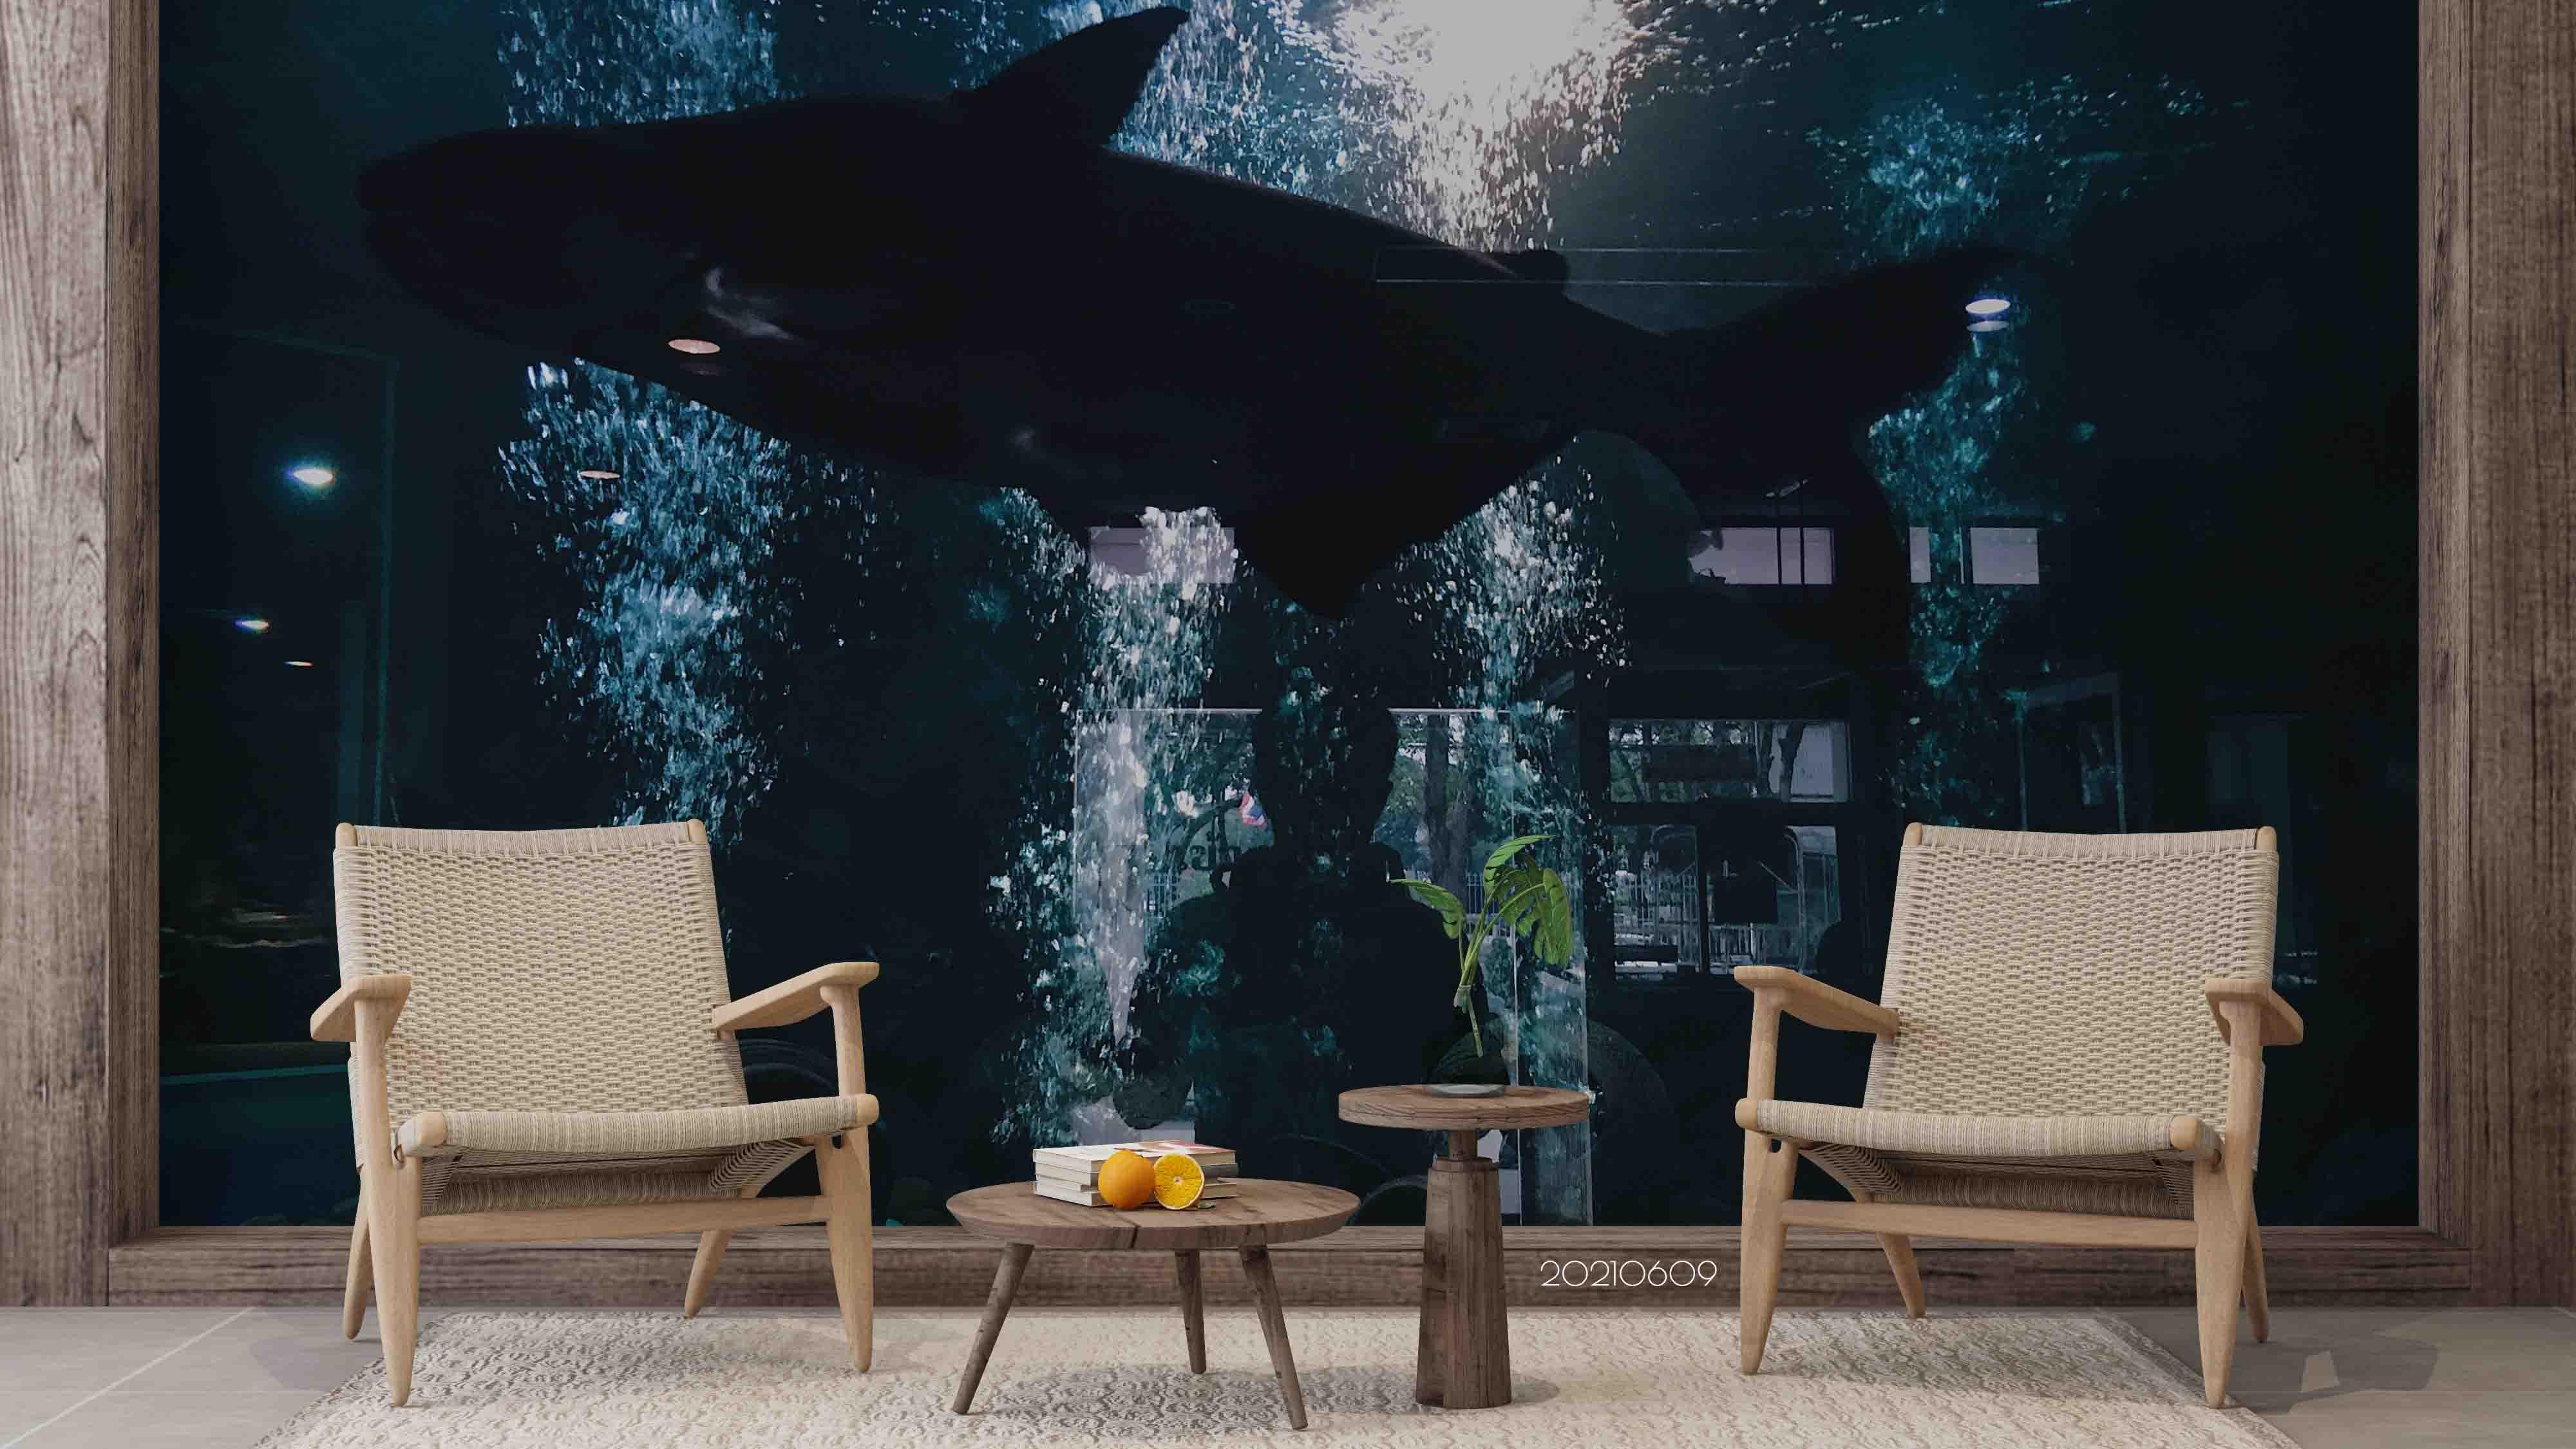 3D  Black Shark  Animal Wall Mural Wallpaper SWW1739- Jess Art Decoration